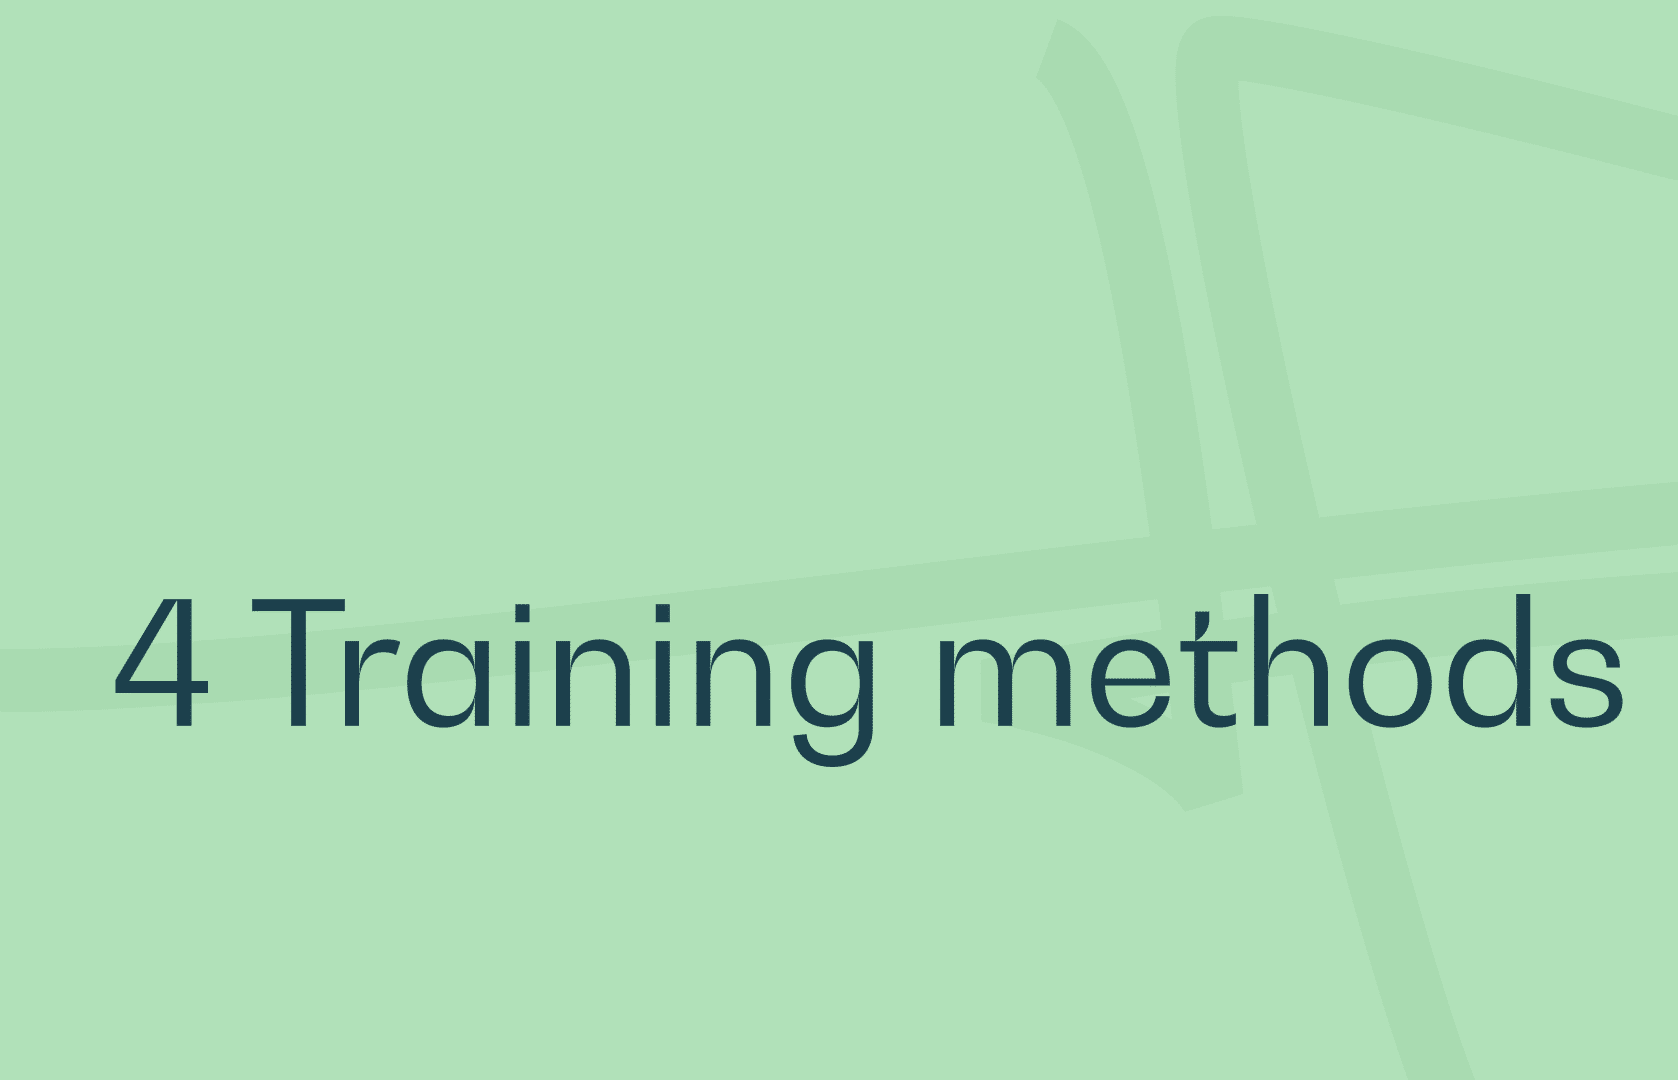 4 Training methods